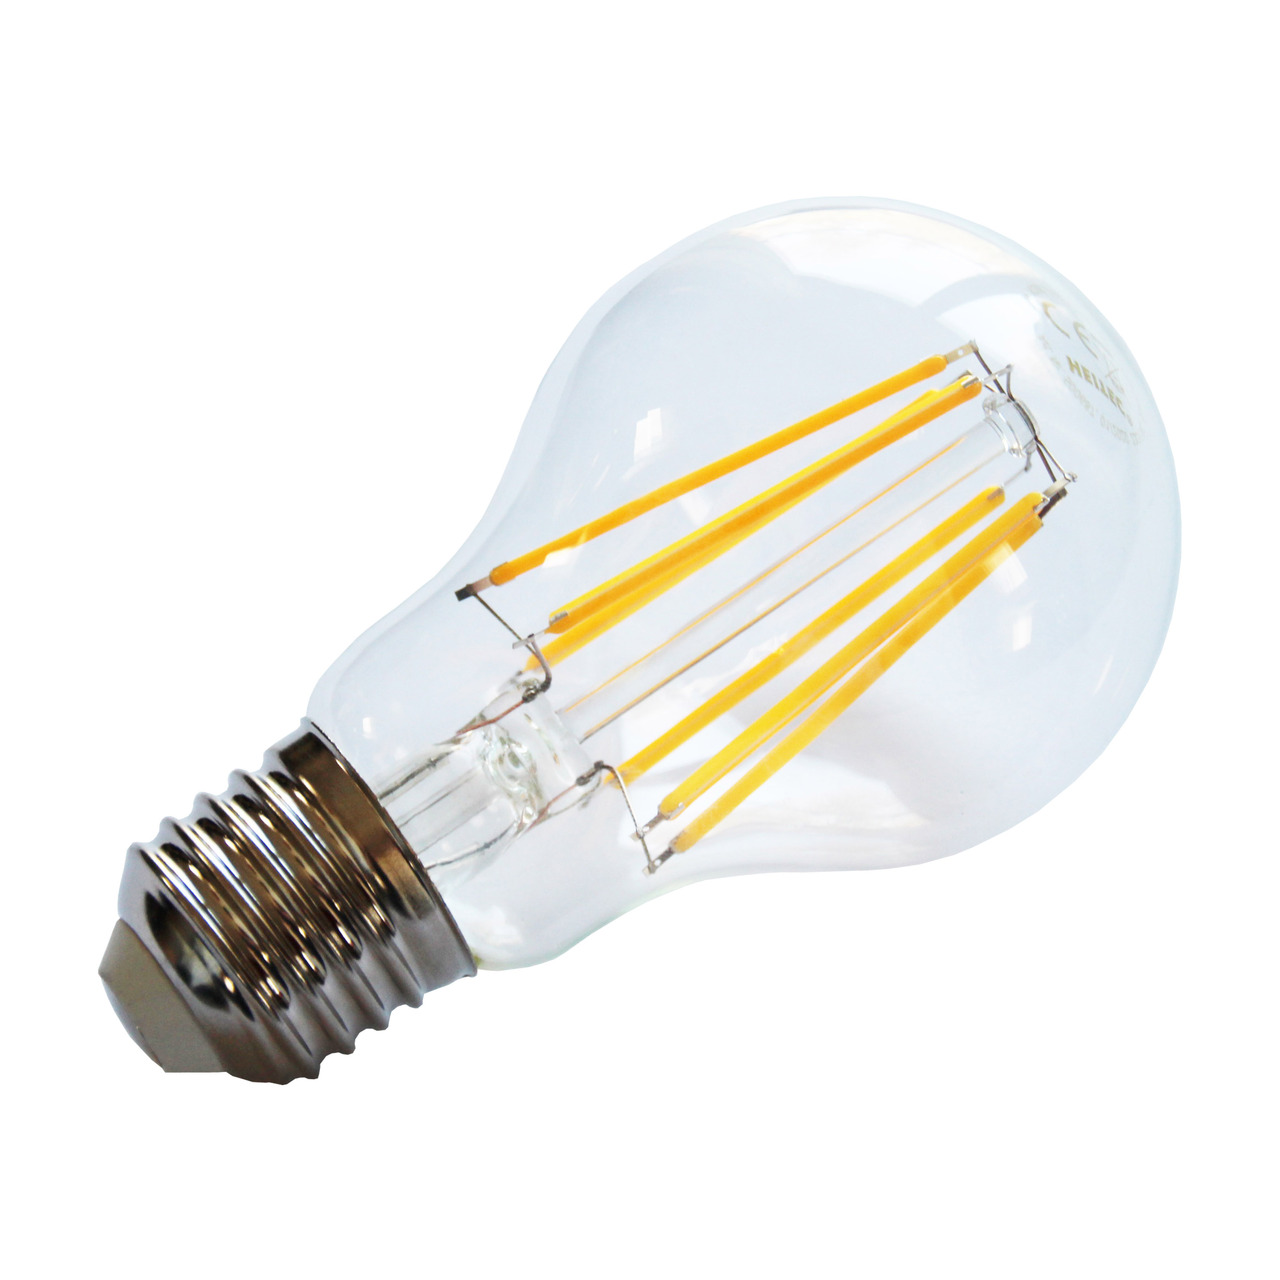 HEITEC 8-W-Filament-LED-Lampe A60- E27- 810 lm- warmweiss- klar unter Beleuchtung